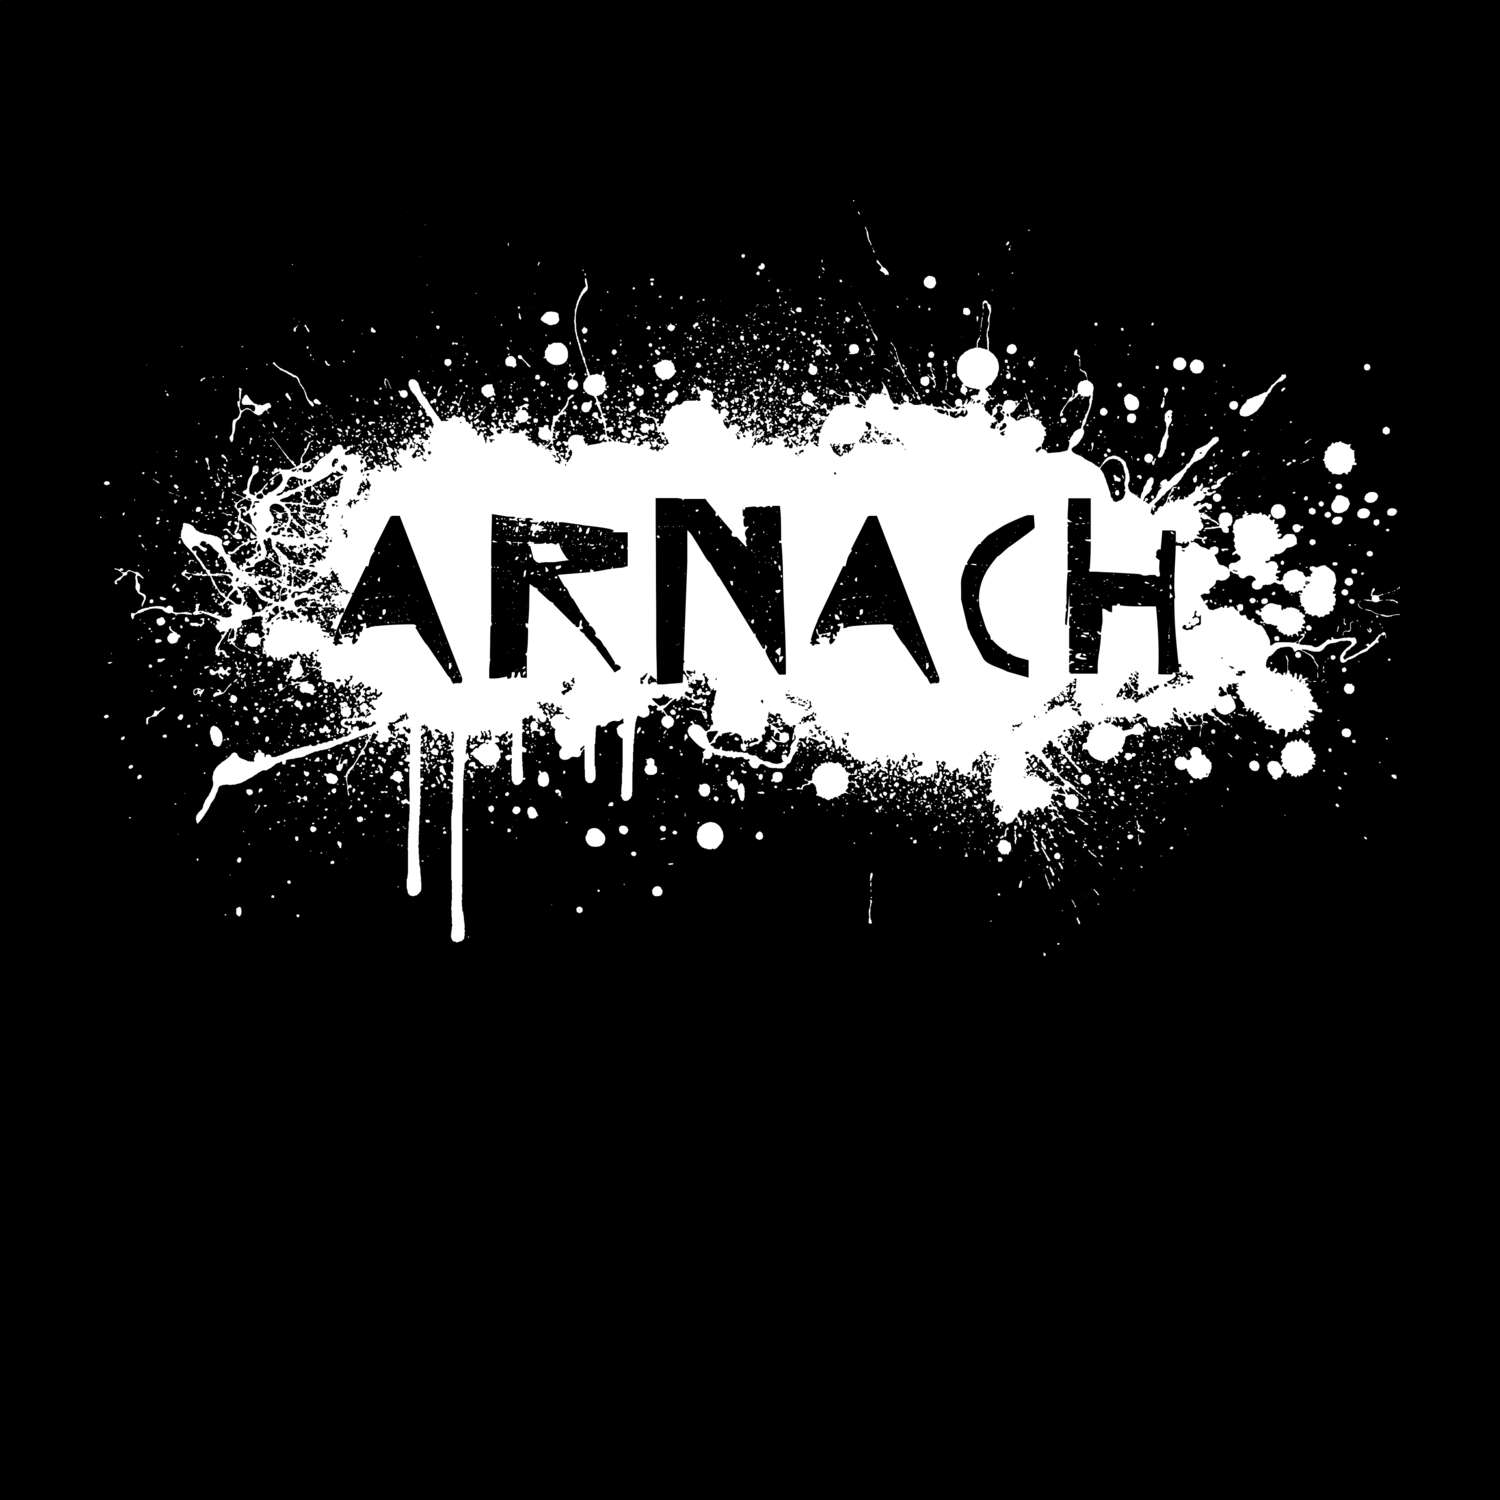 Arnach T-Shirt »Paint Splash Punk«